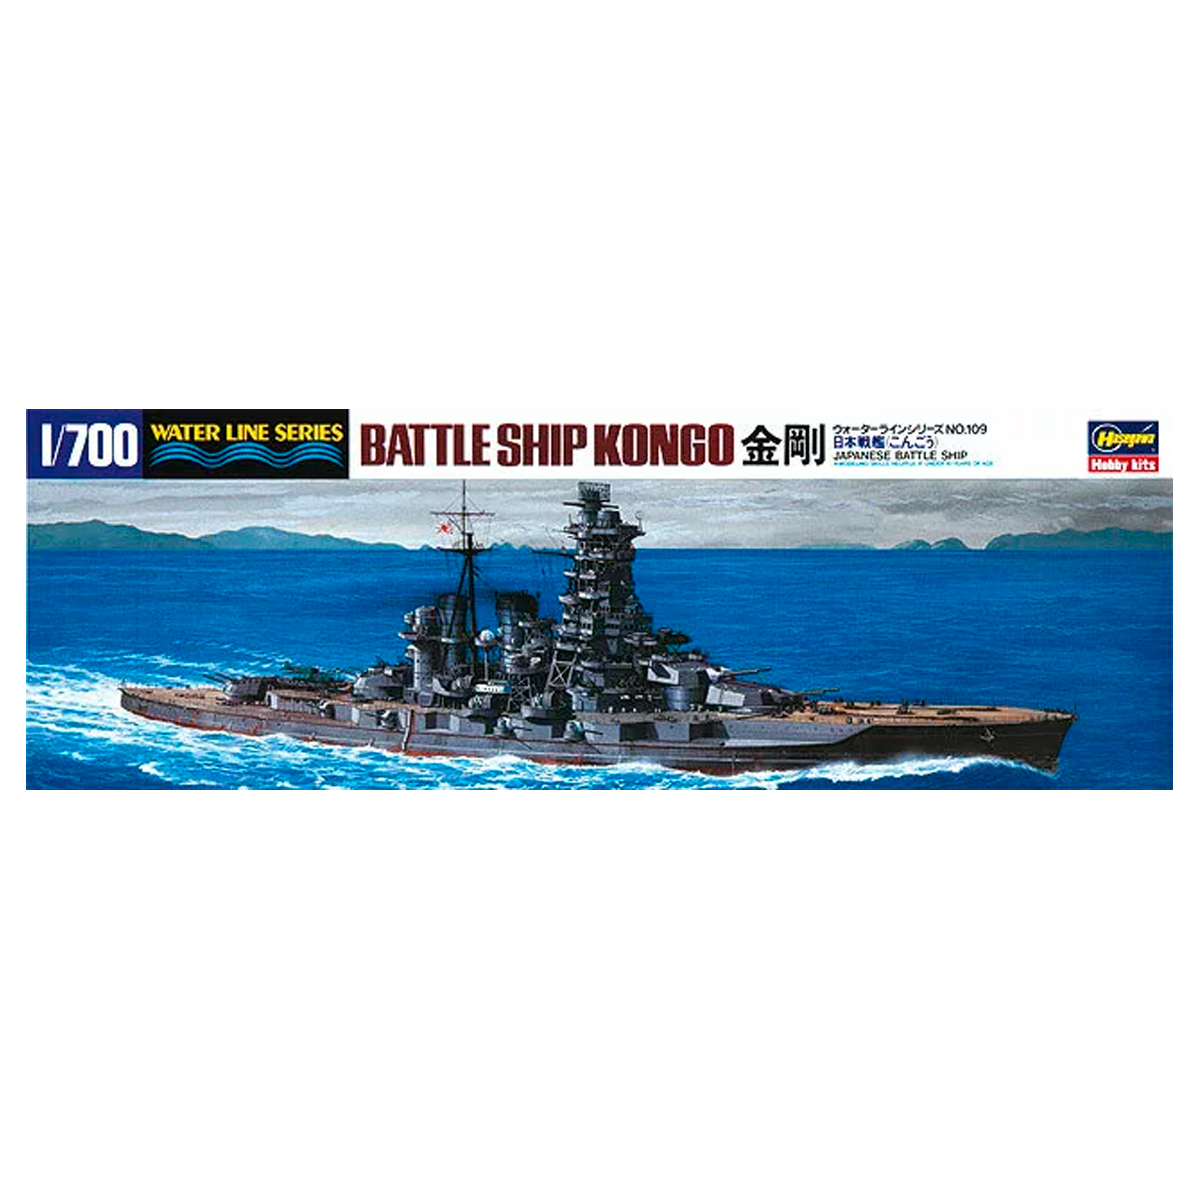 WL109-49109 1/700 IJN Battleship Kongo